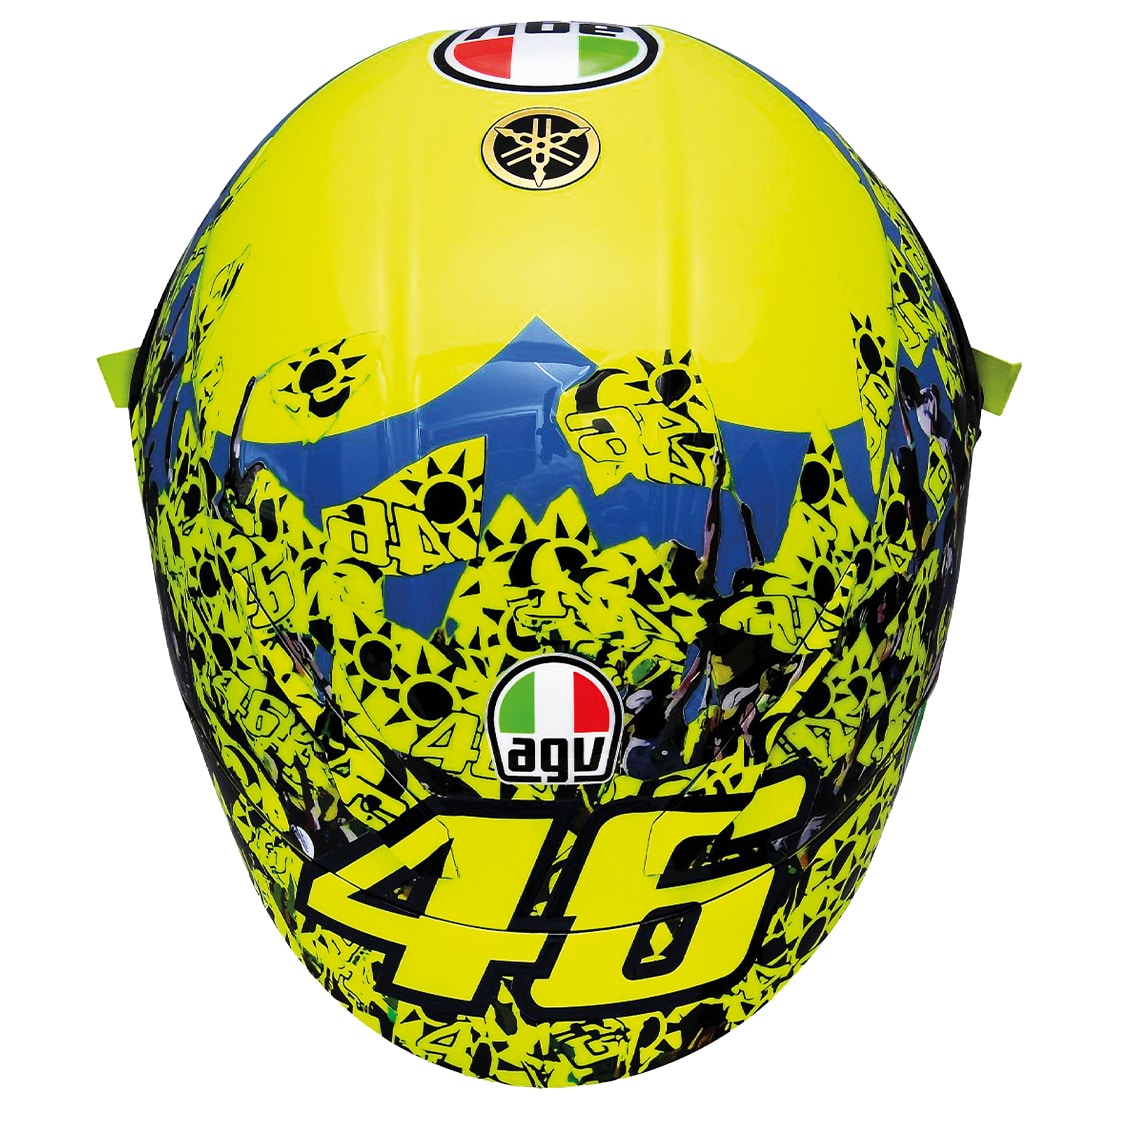 Valentino Rossi helmet